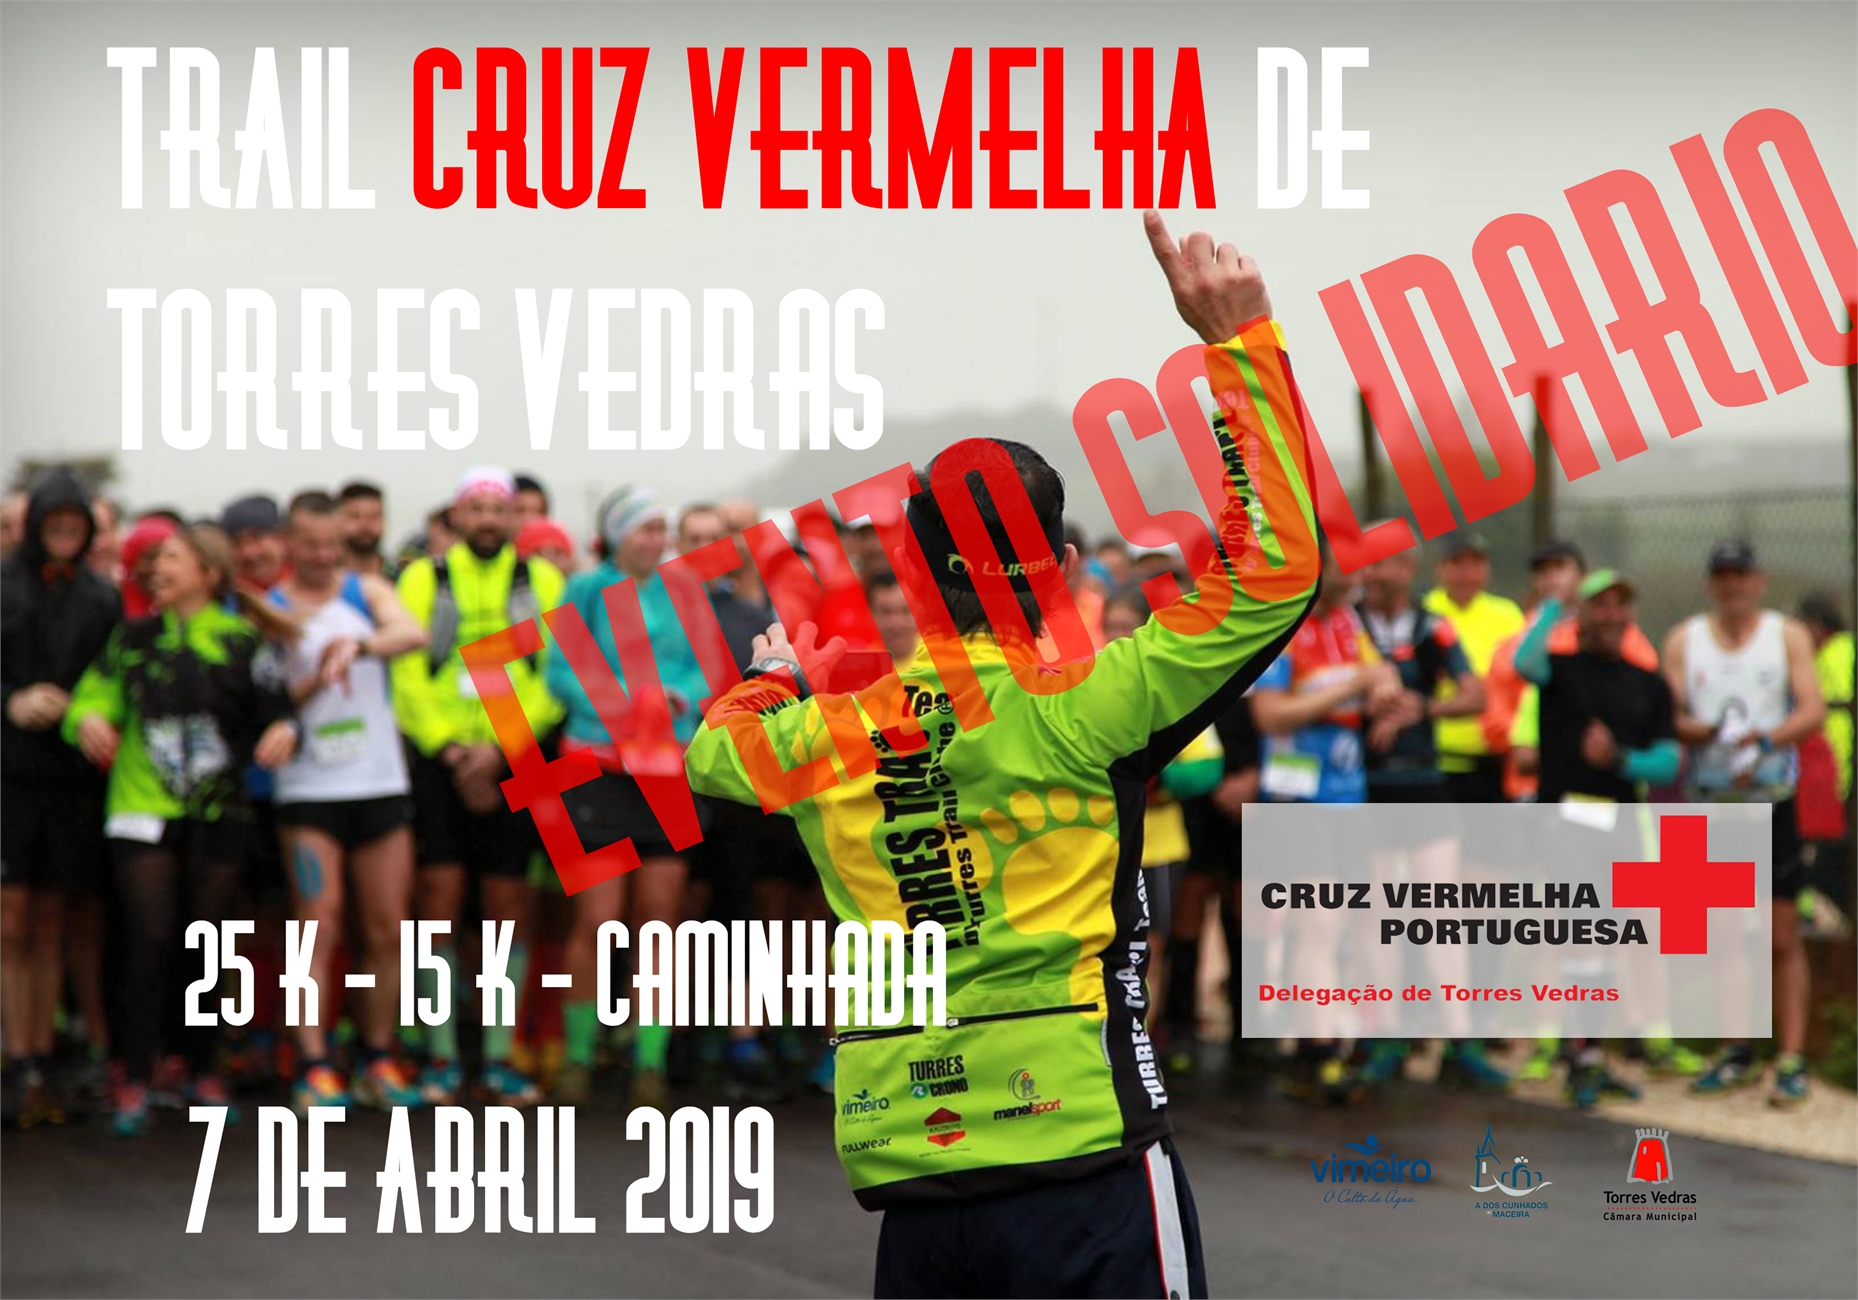 Trail Cruz Vermelha de Torres Vedras 2019 - Eventos - TURRESEVENTS